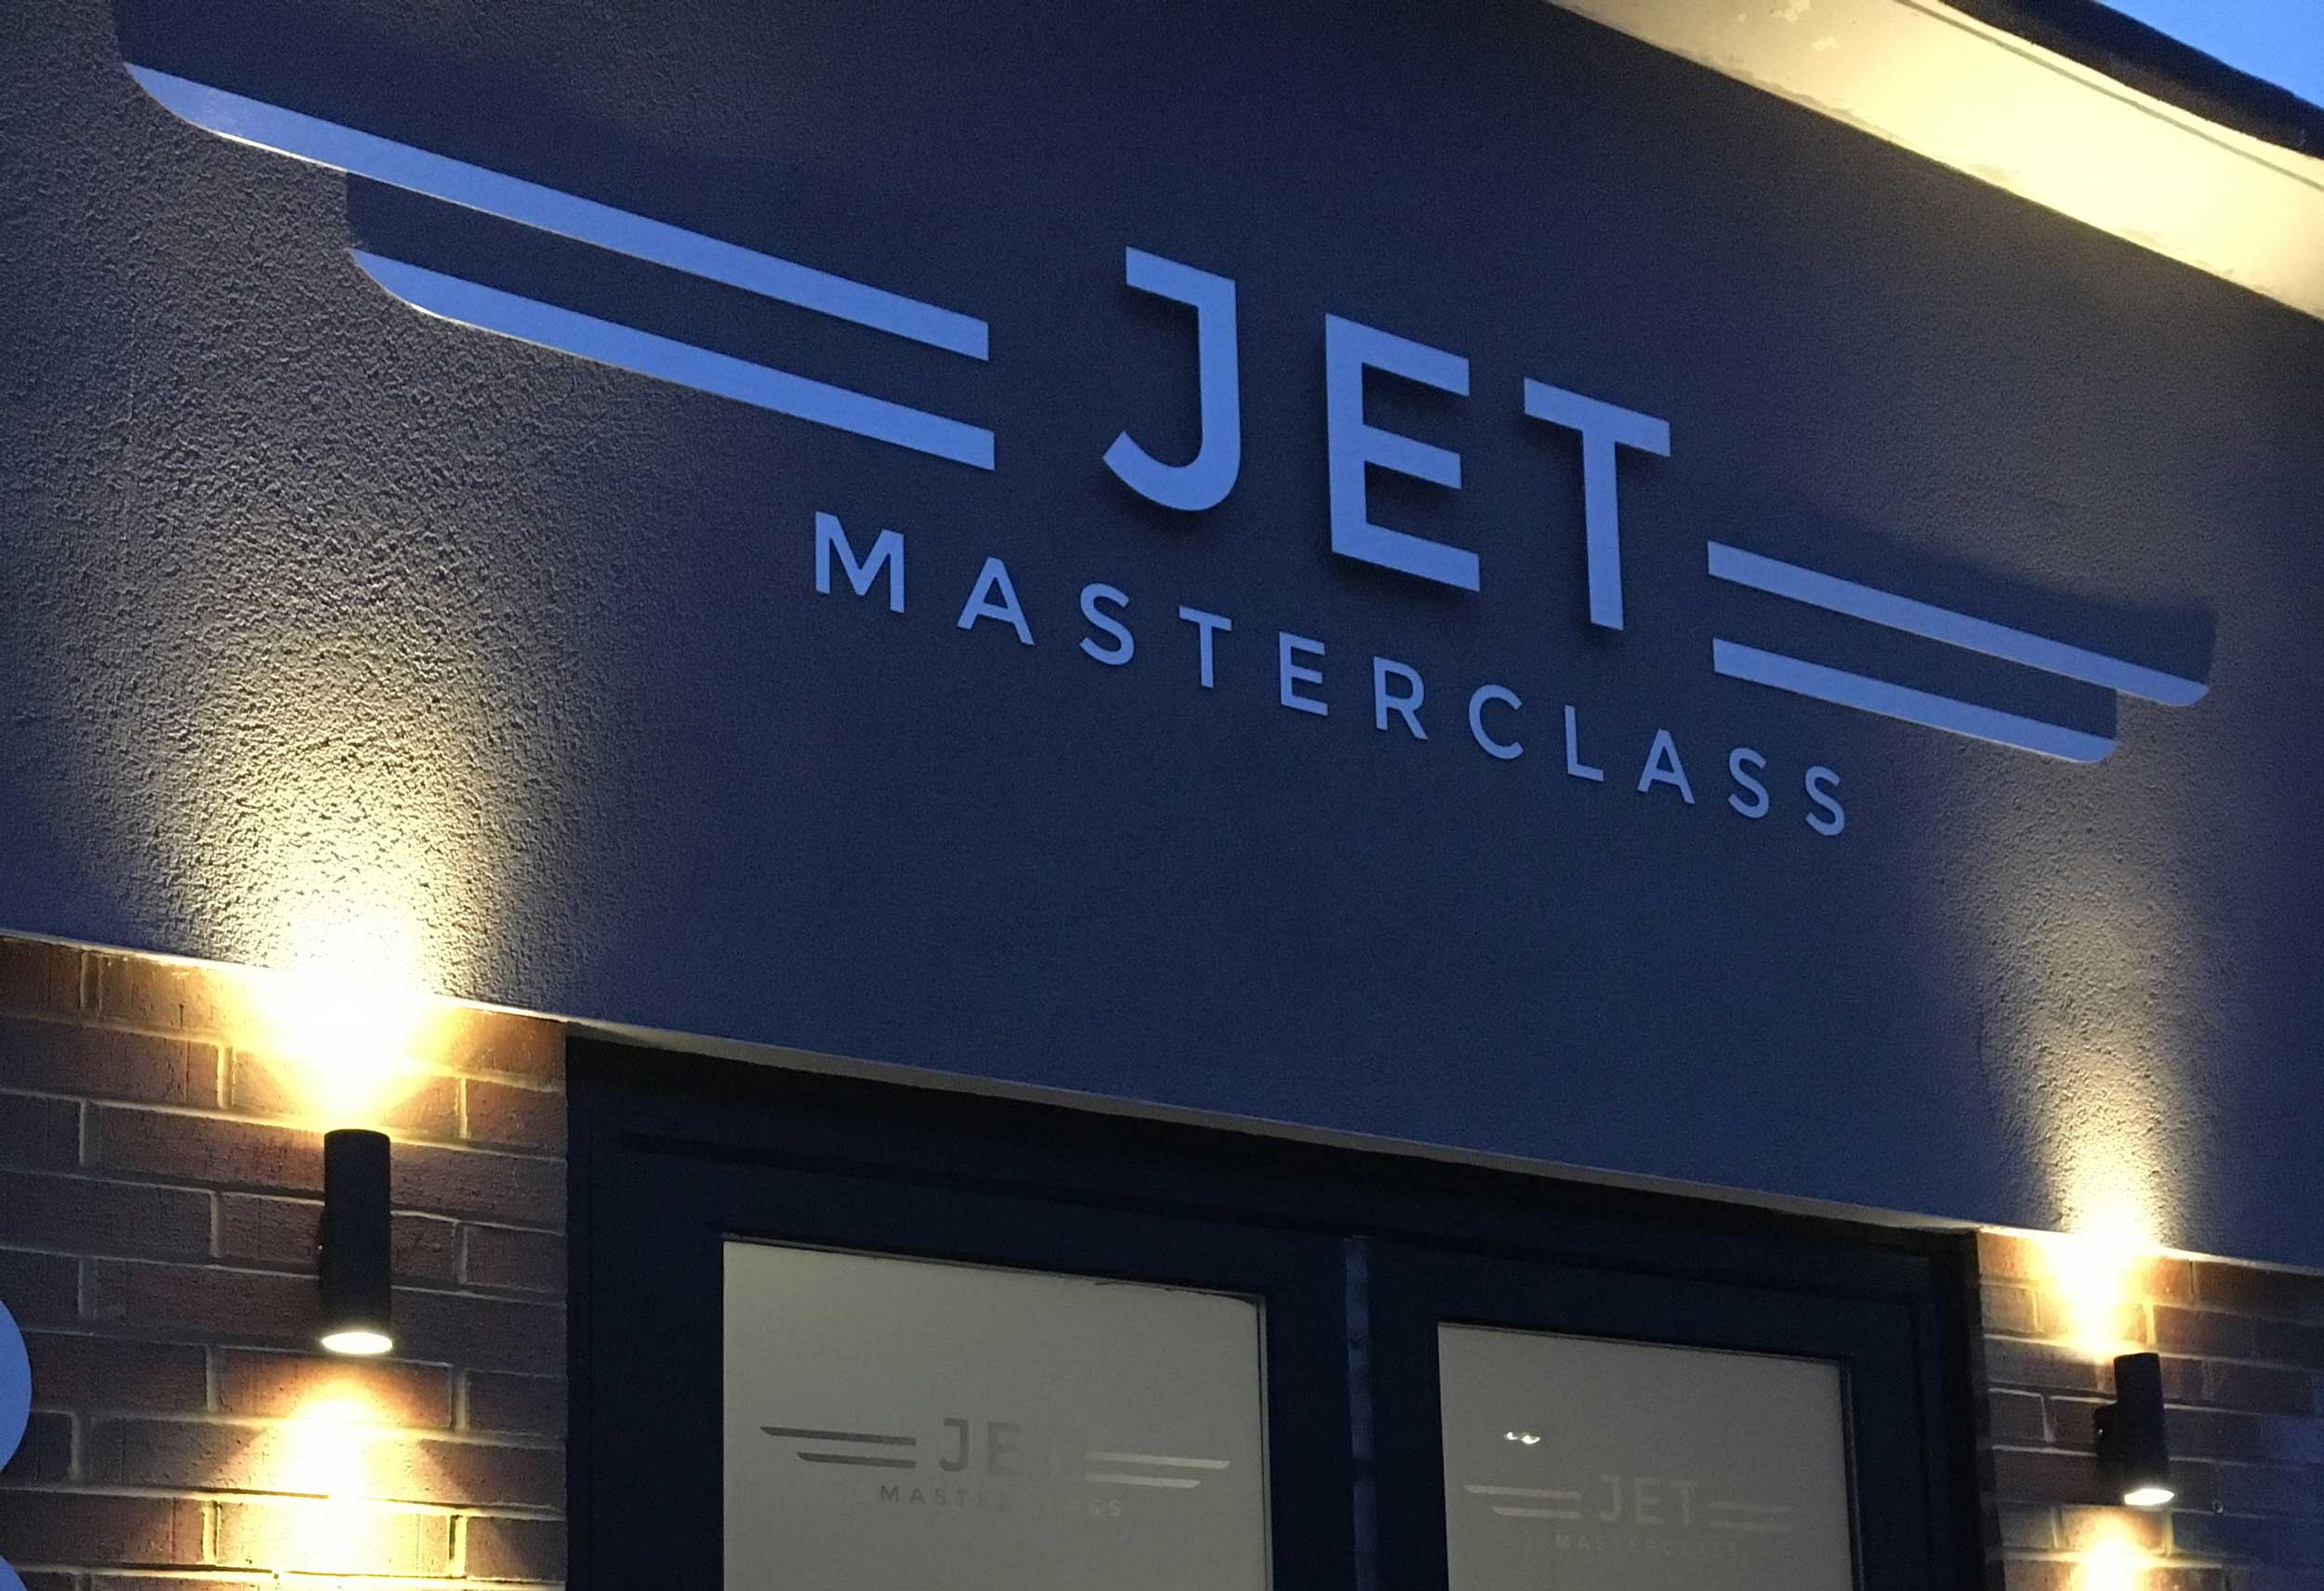 Jet Masterclass